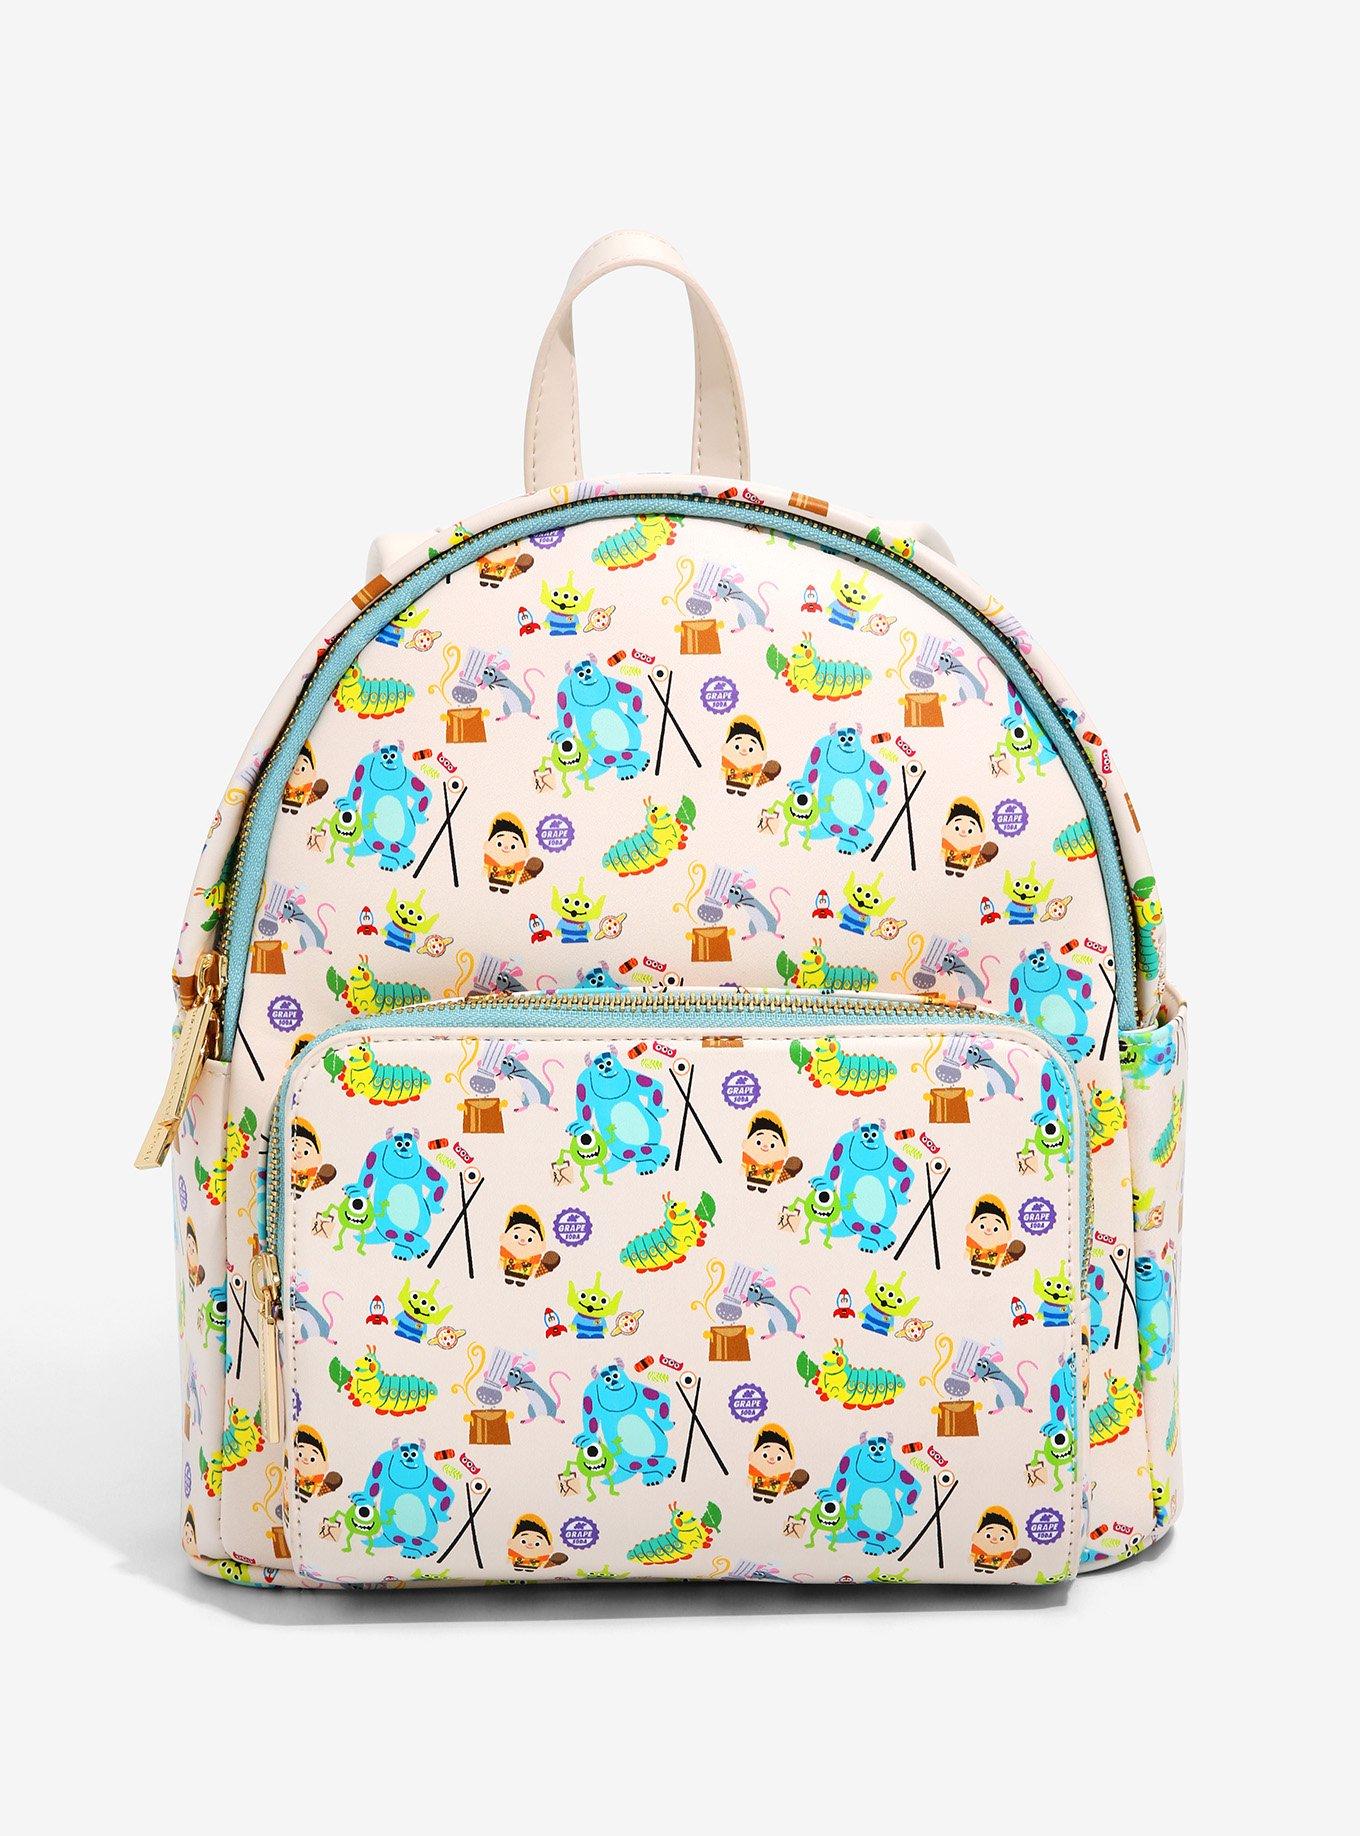 Disney Danielle Nicole Bag - The Mickey Mouse Club - Denim Mini Backpack